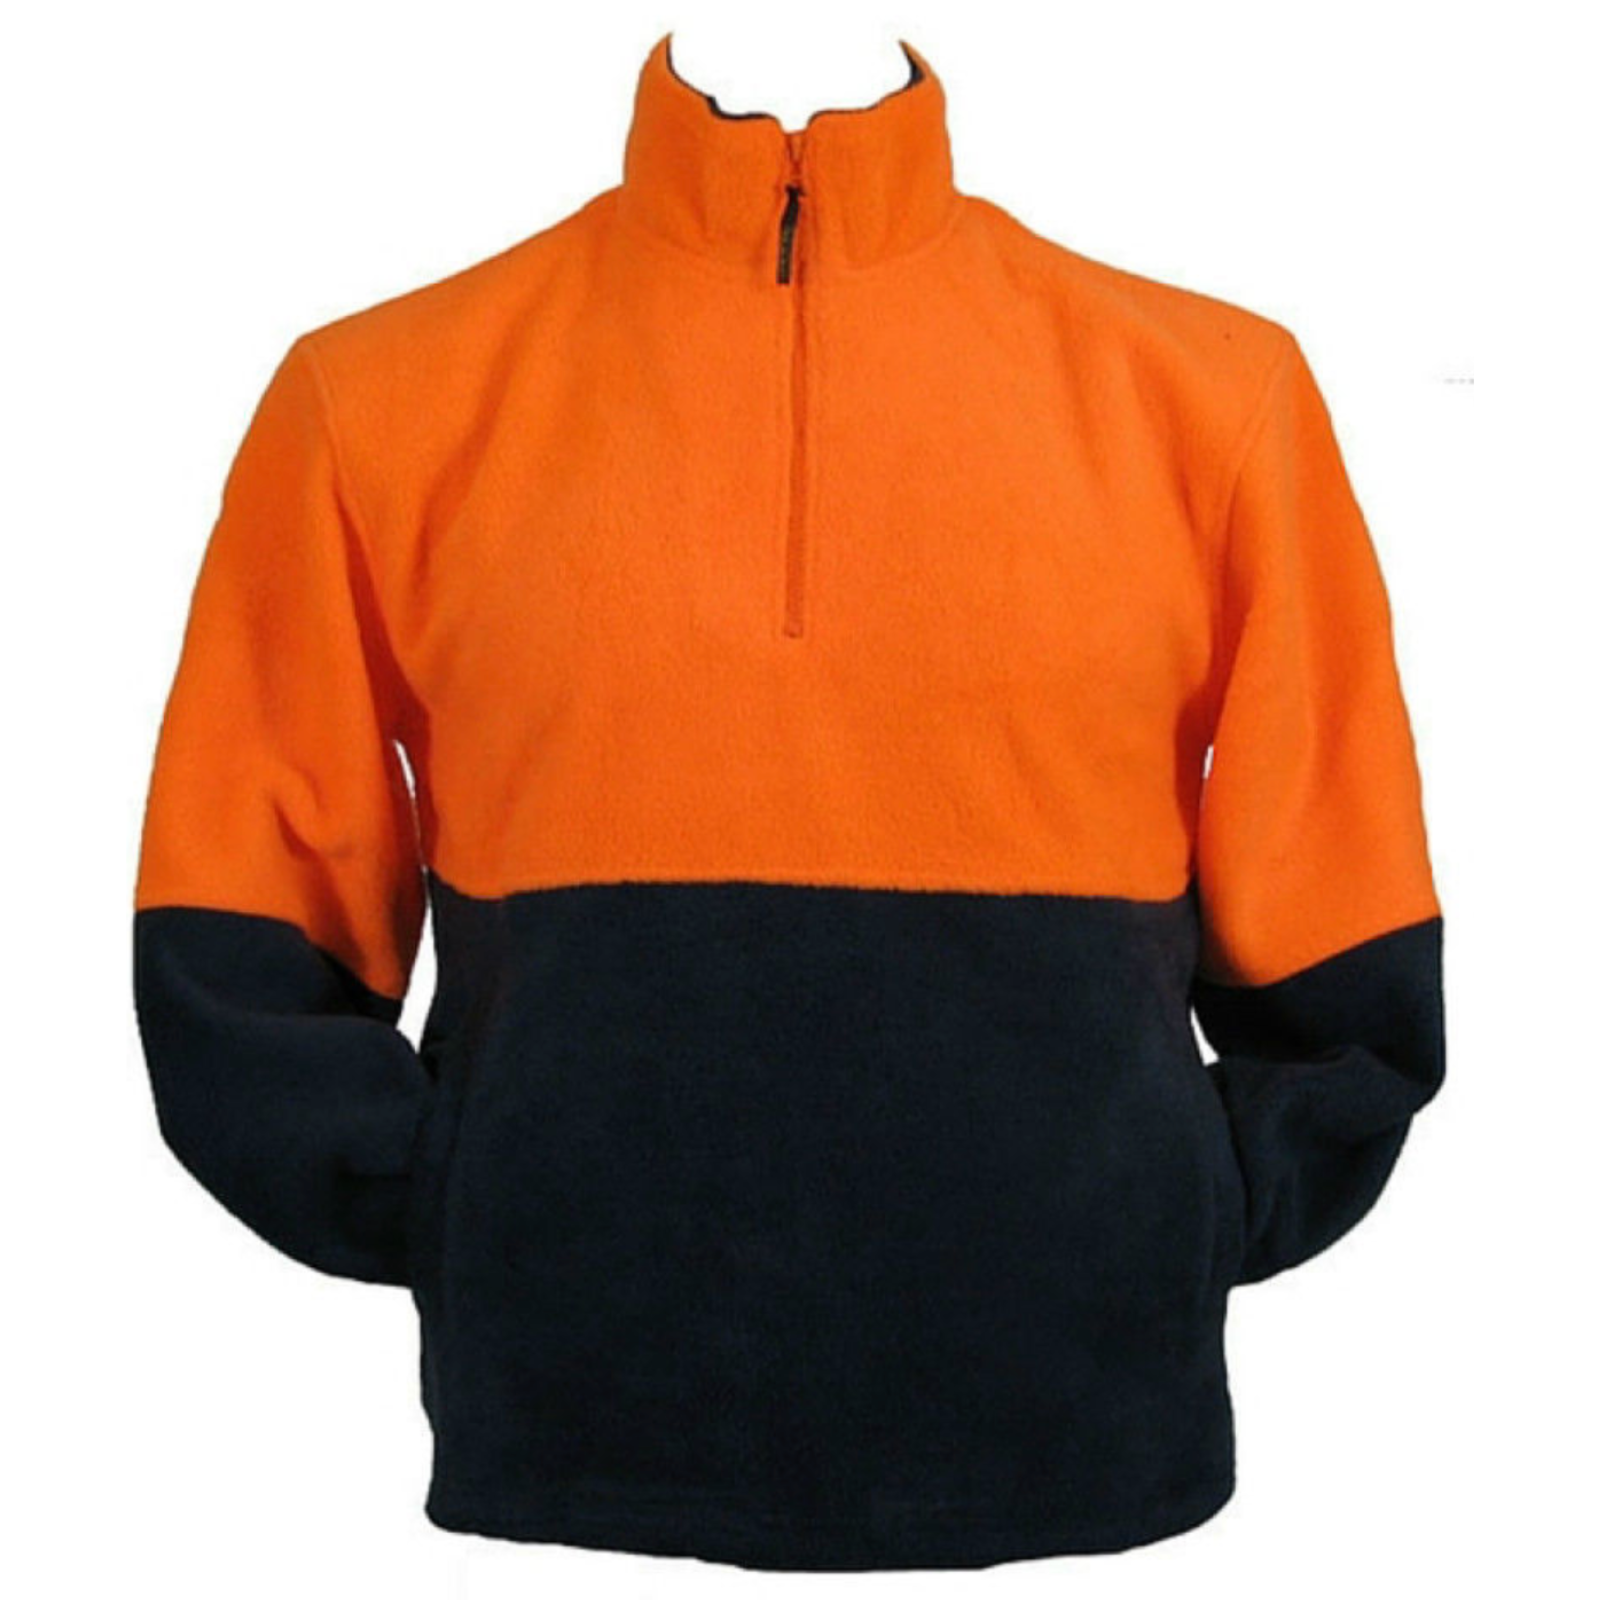 HI VIS POLAR FLEECE Jumper 1/2 Half Zip Safety Workwear Fleecy Jacket Unisex - Orange - M